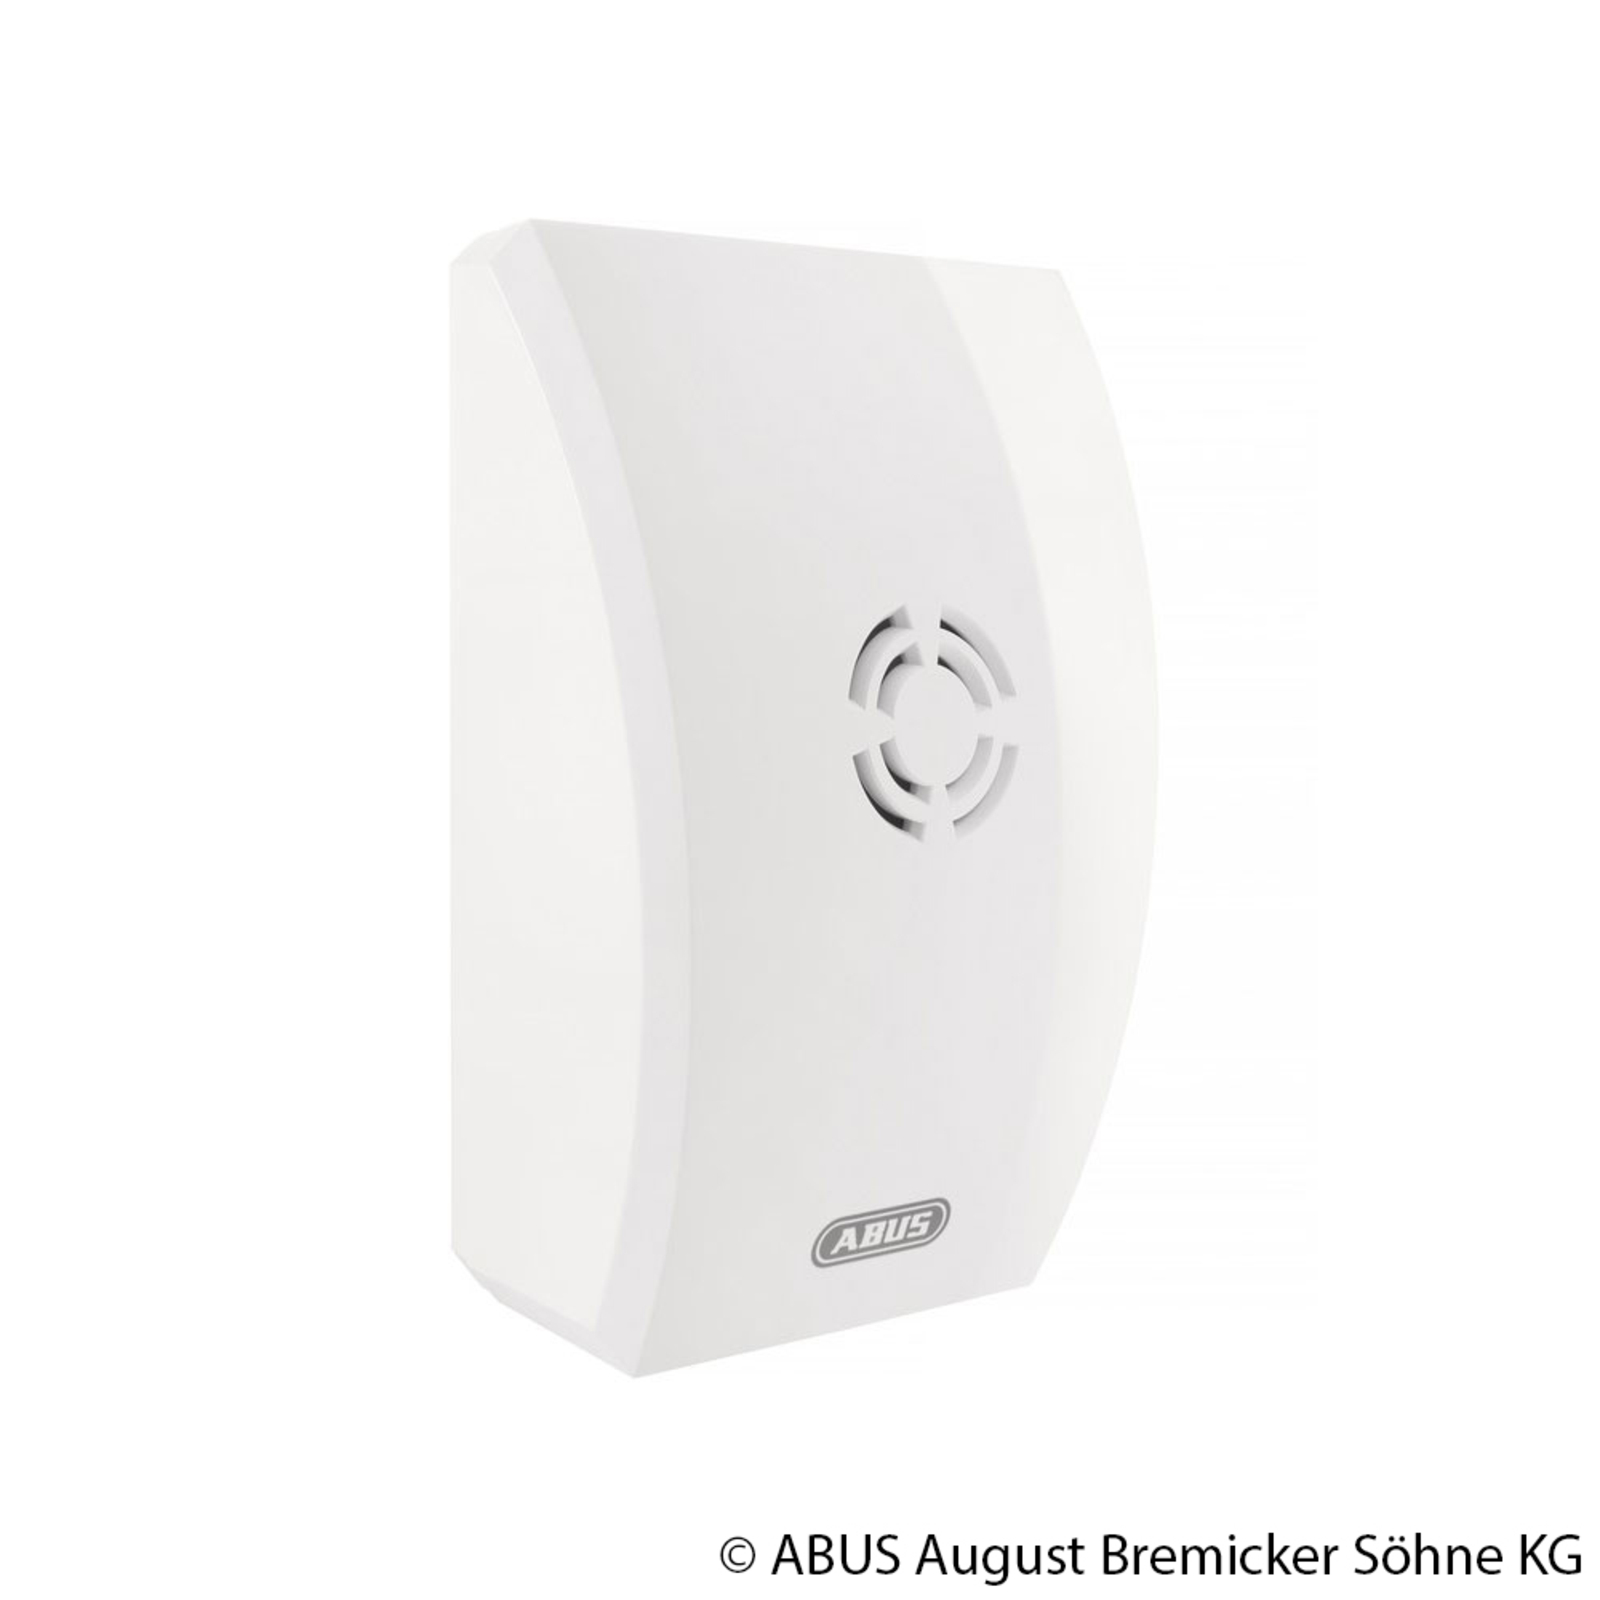 ABUS Smartvest wireless water detector